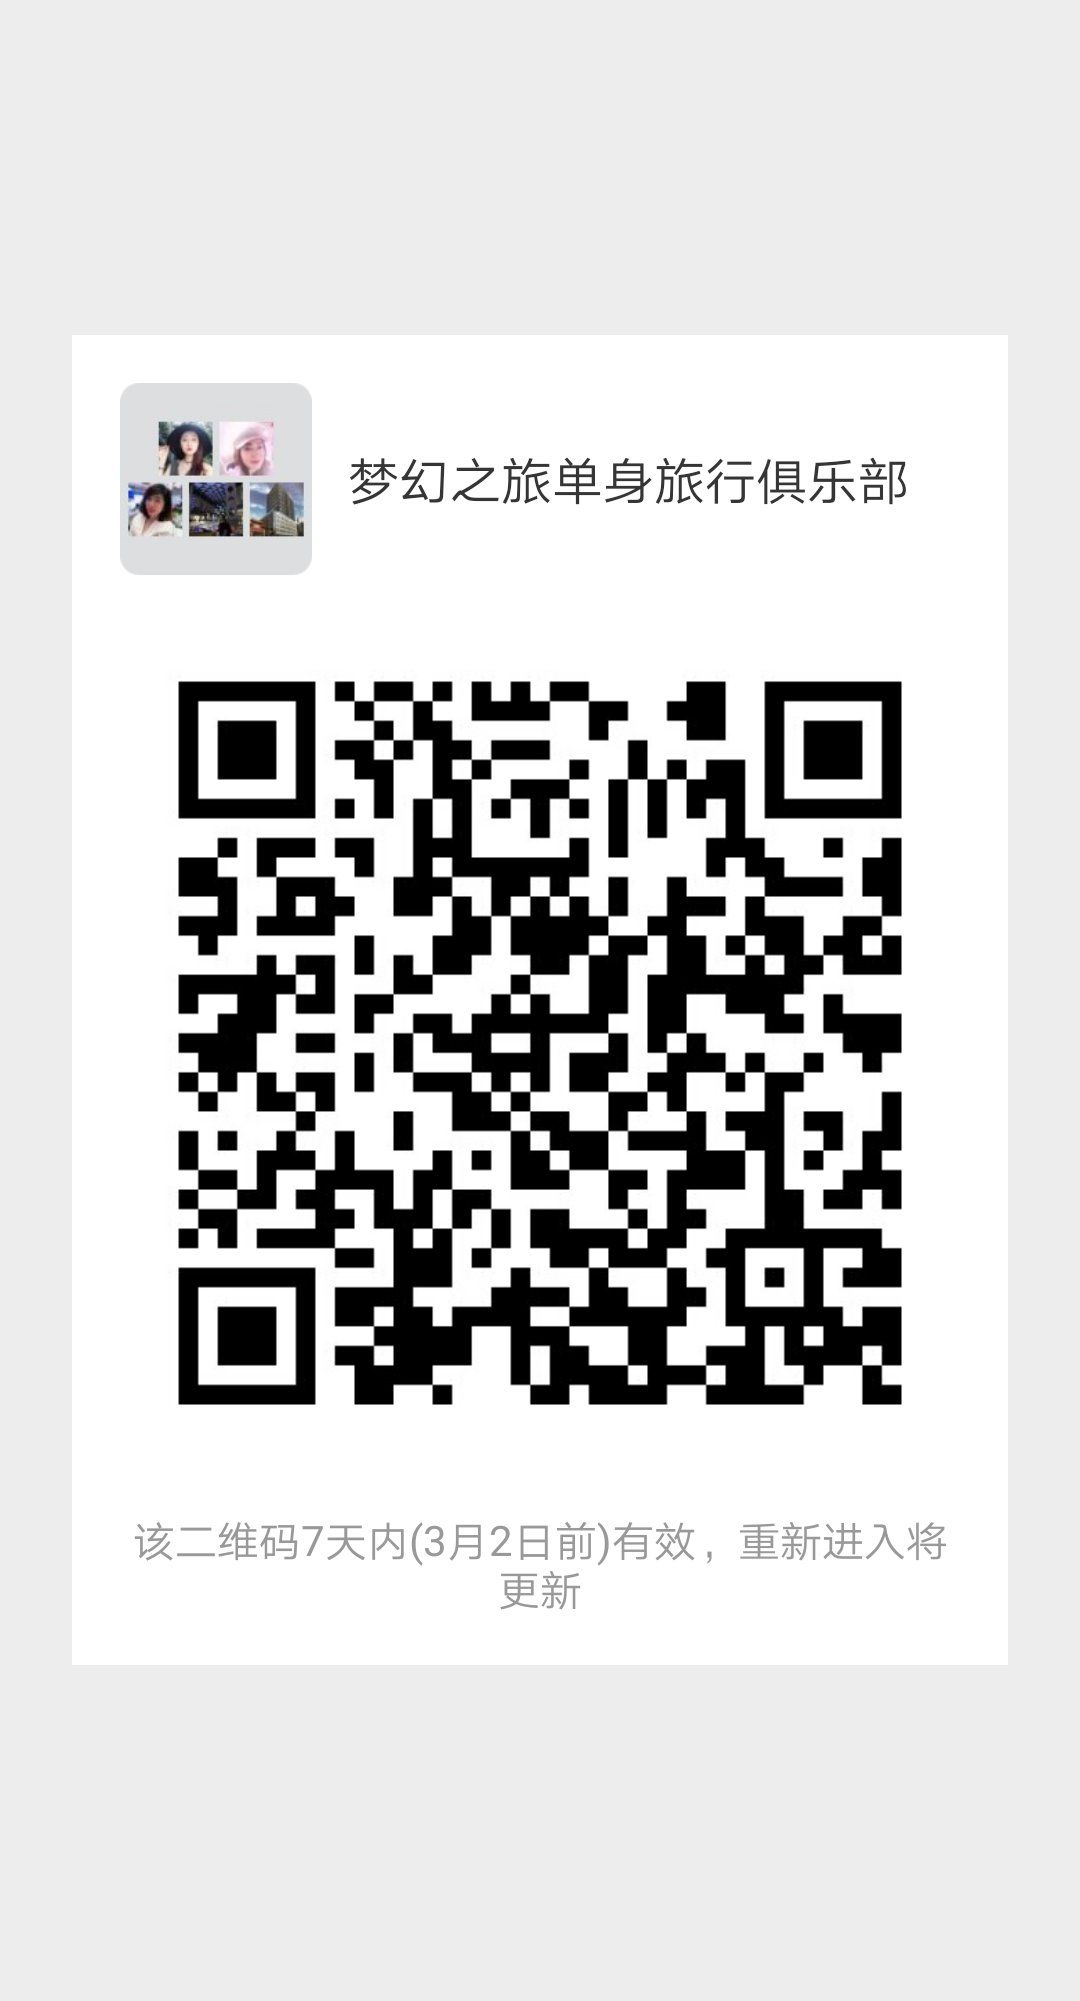 WeChat Image_20190224044955单身俱乐部二维码.jpg